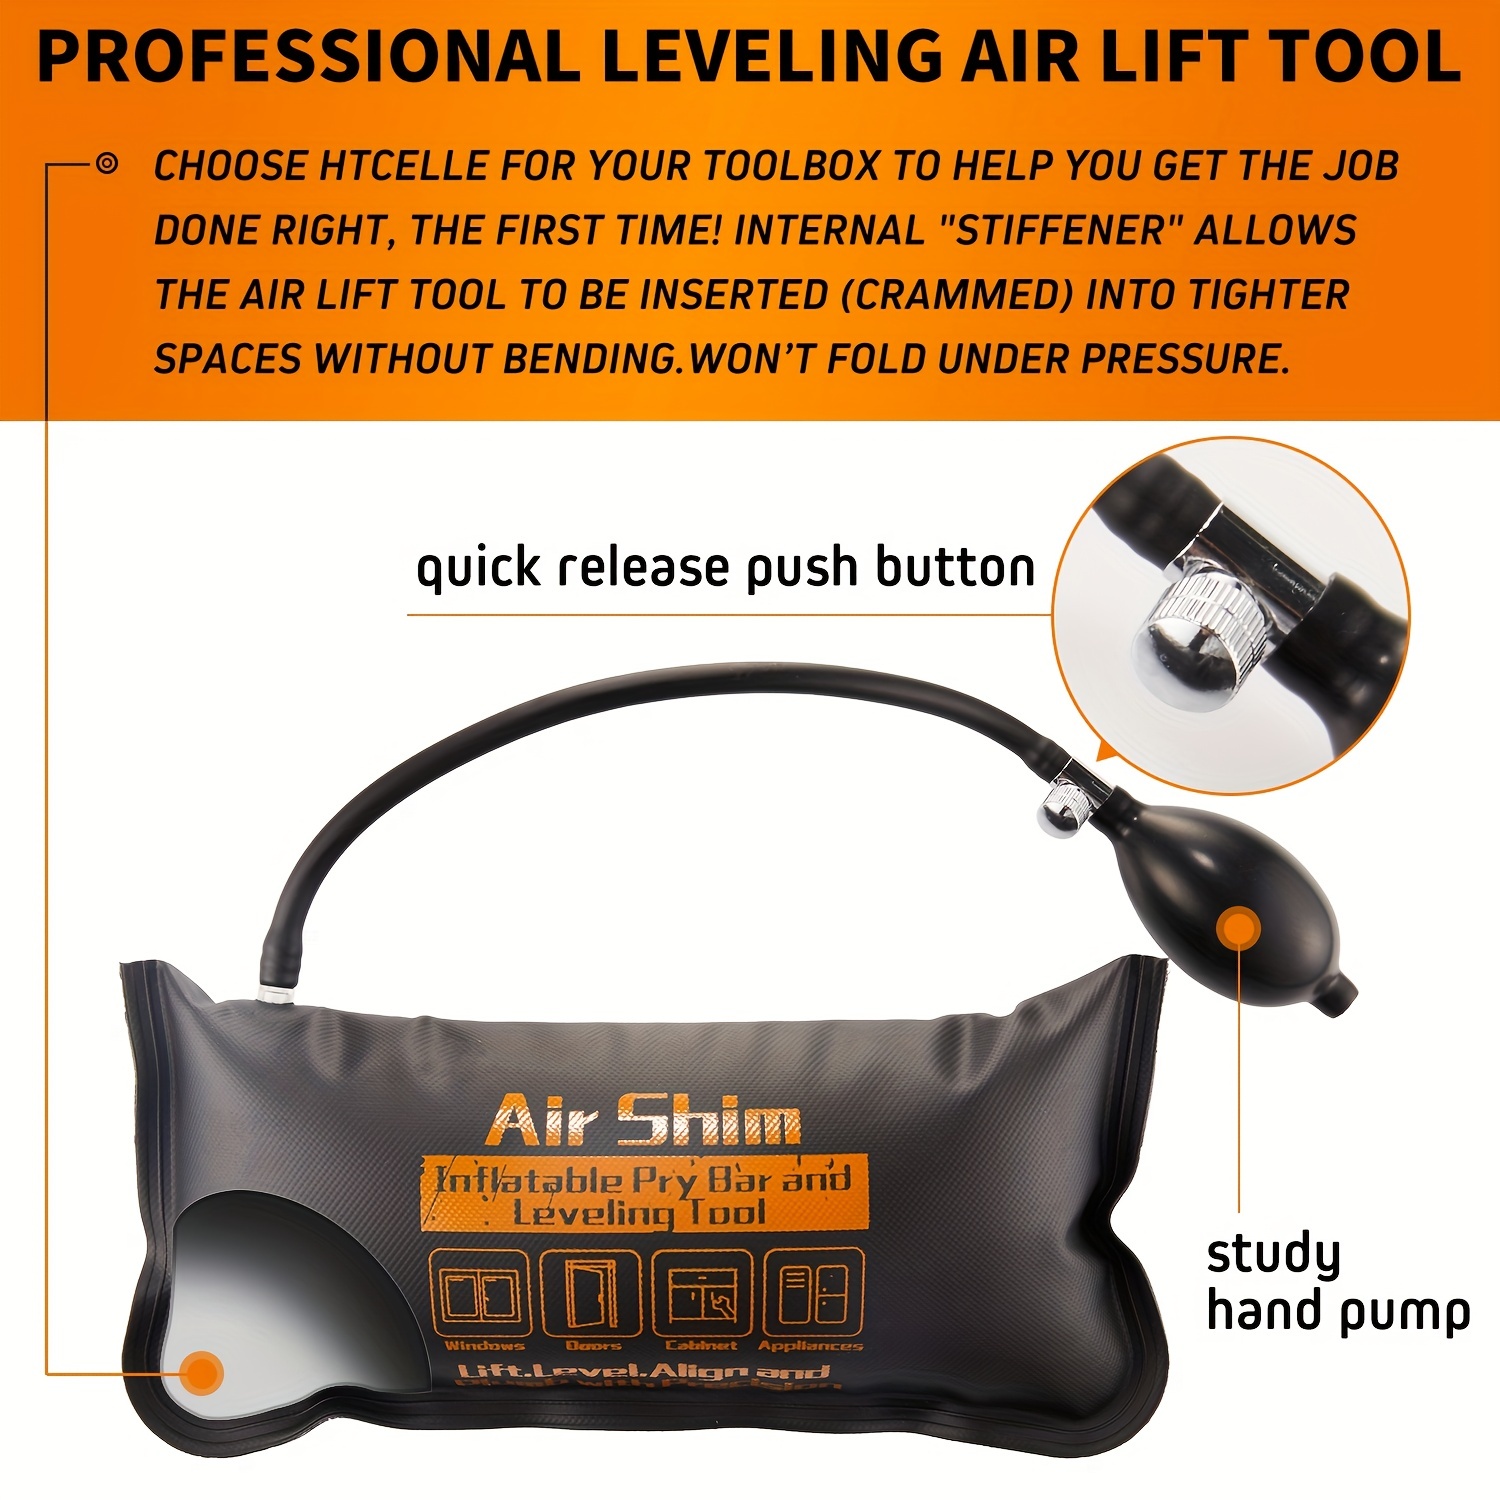 Air Wedge Bag Kit,Air Wedge Bag Pump, 3 Pack Commercial Inflatable Air Wedge